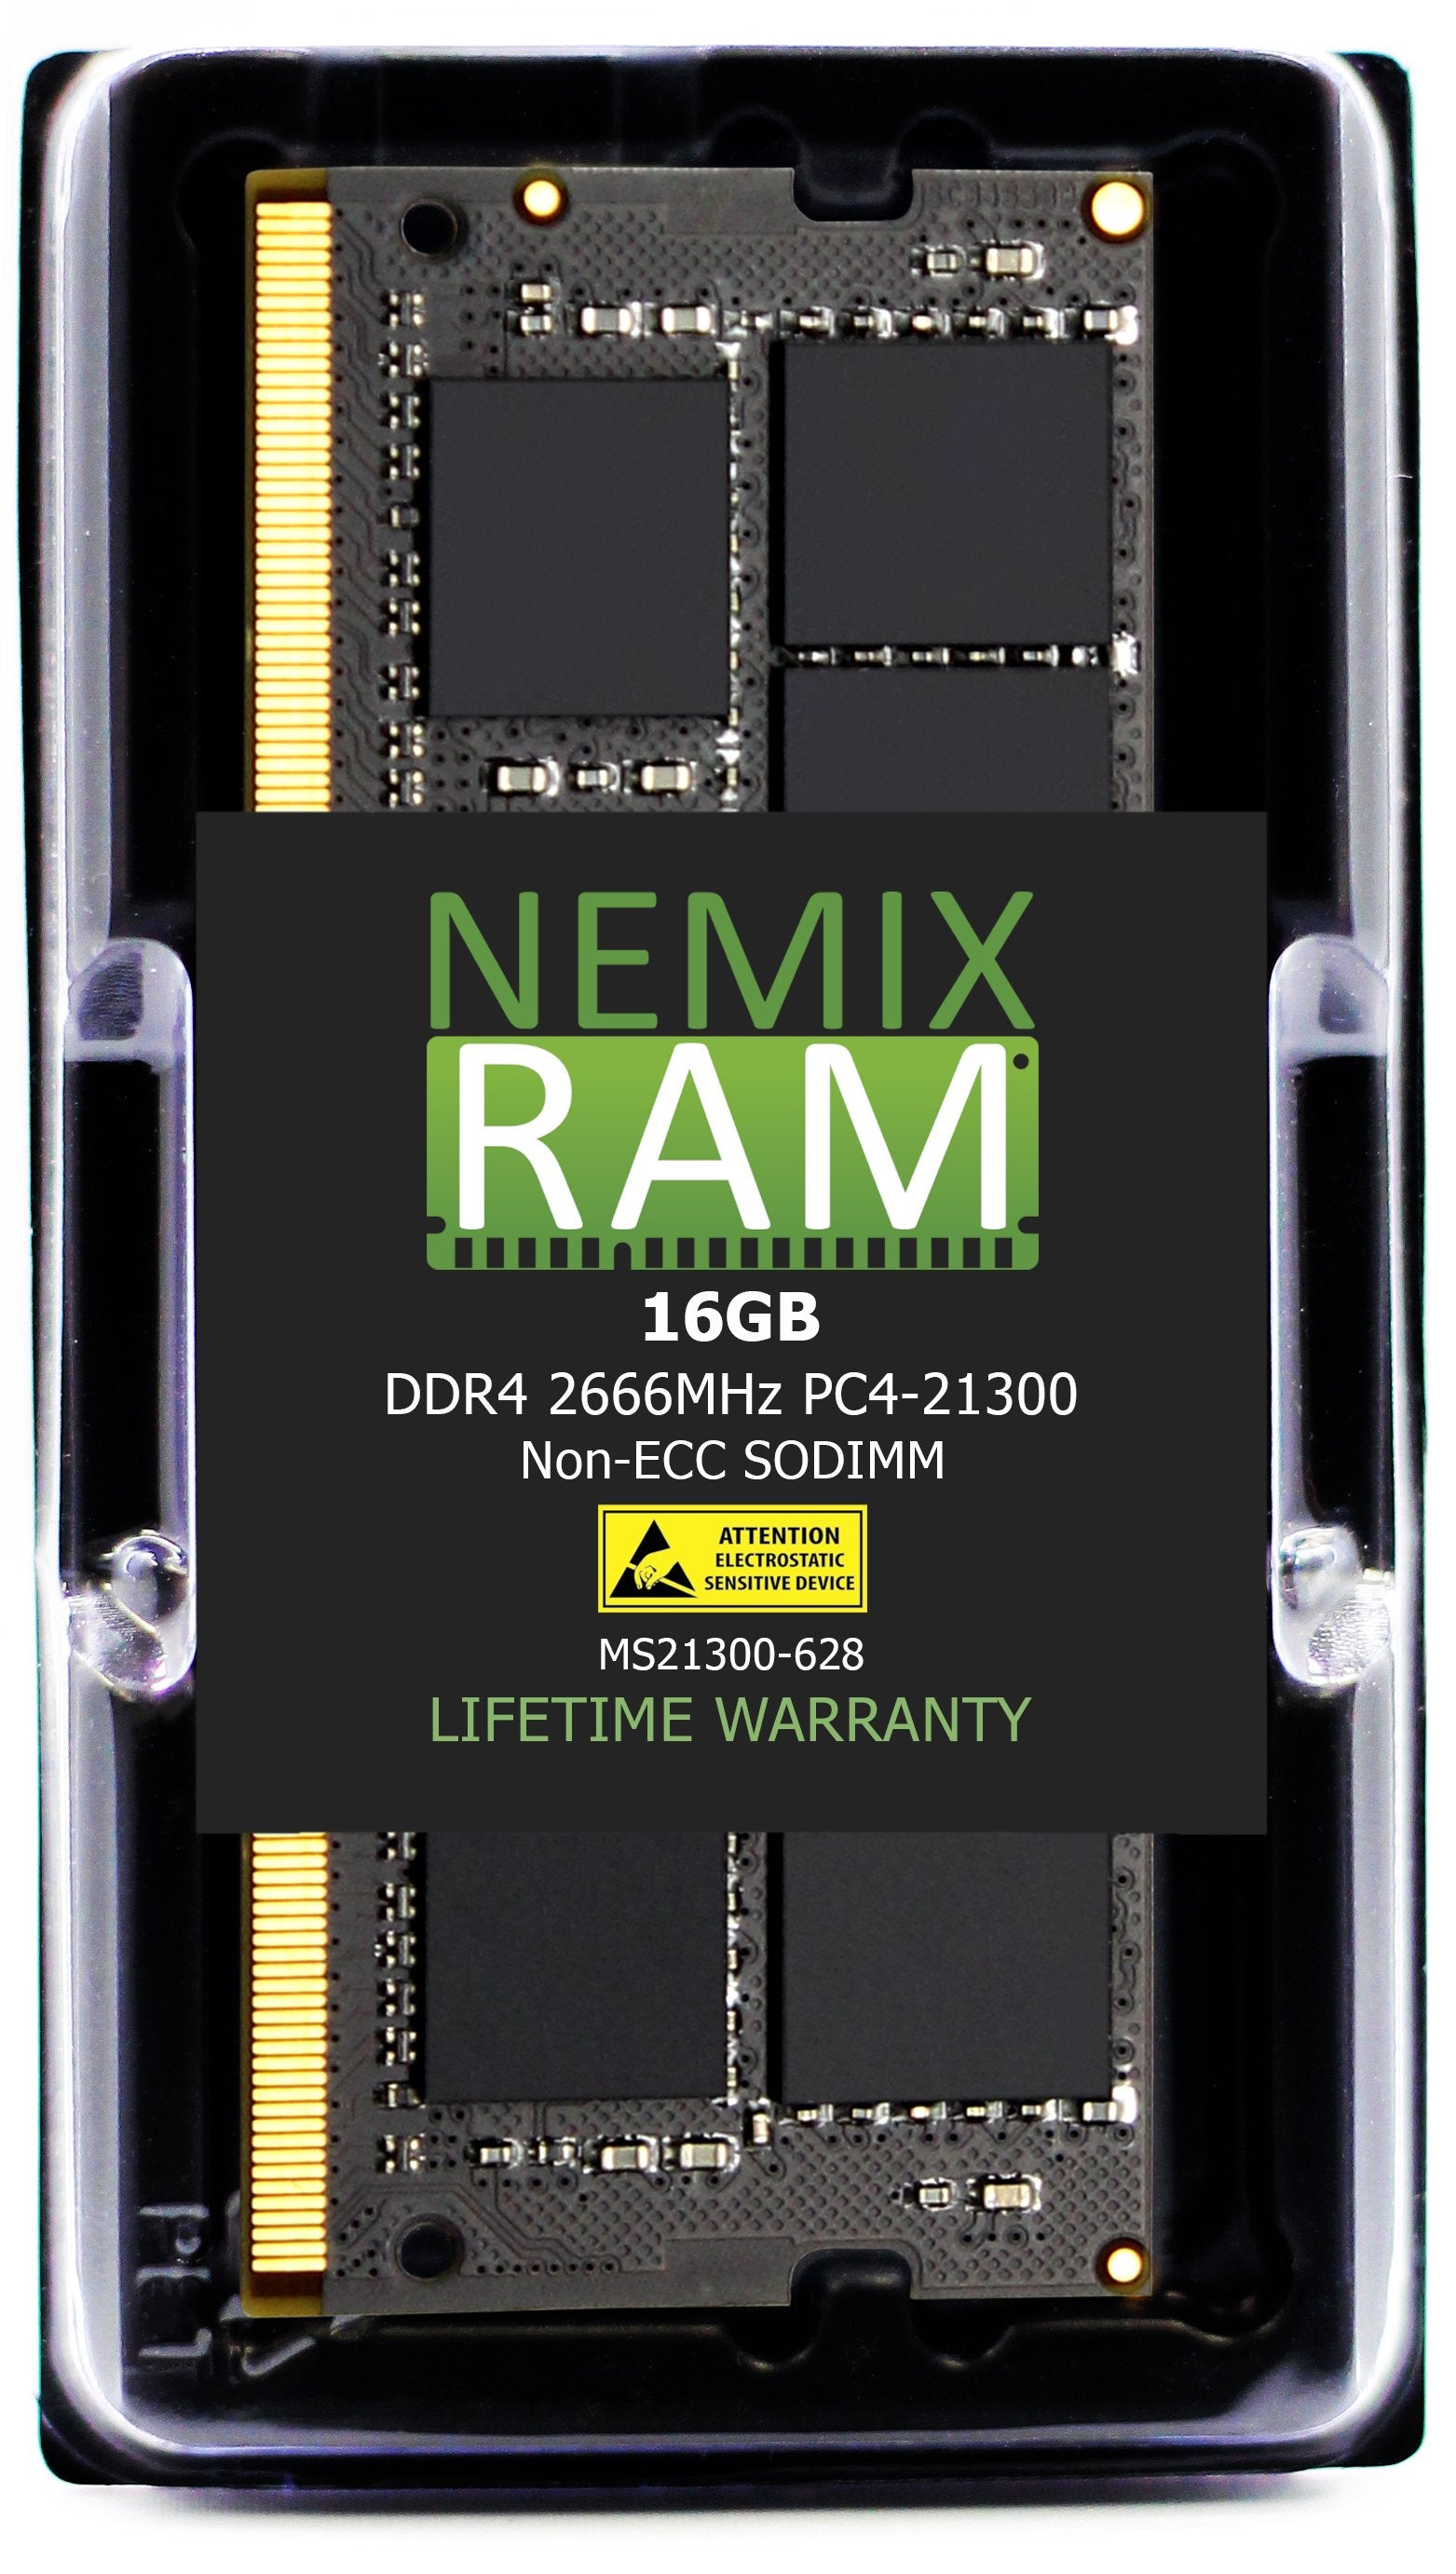 NEMIX RAM Memory Upgrade equivalent to ASUSTOR AS-16GD4 92M11-S16D40 SODIMM Memory Module